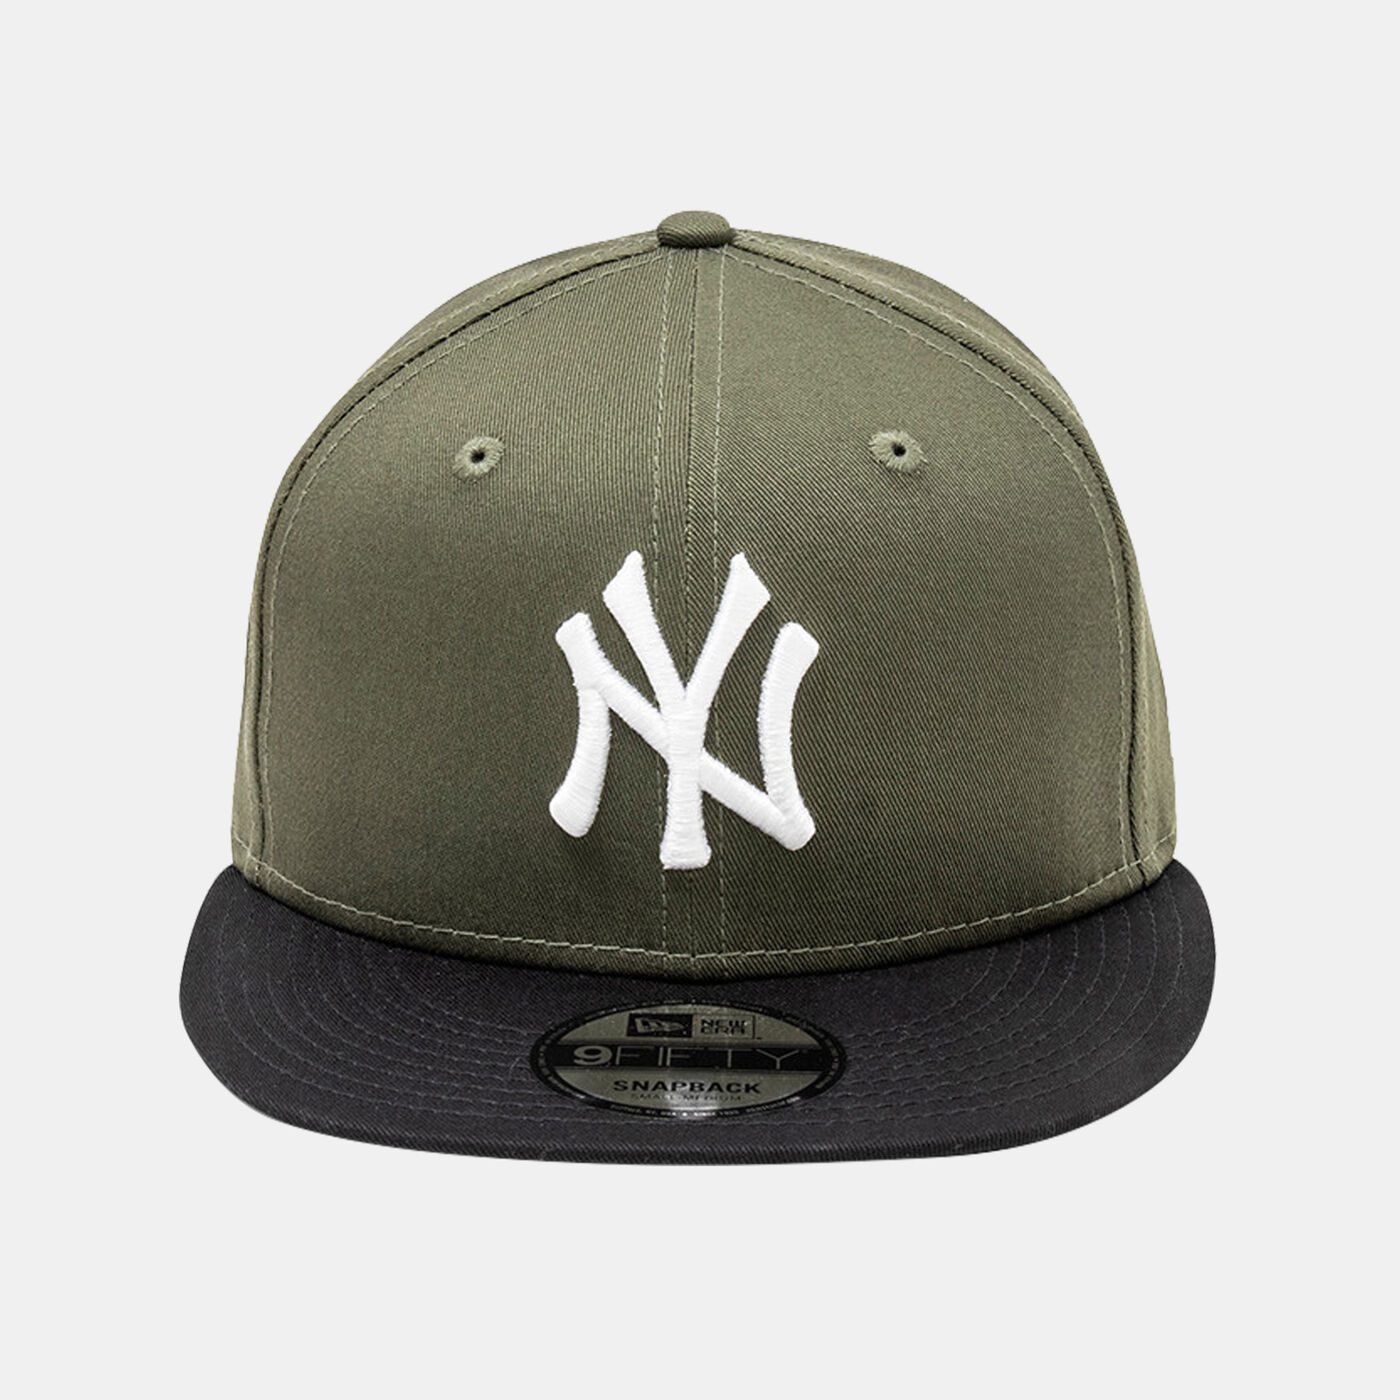 Men's New York Yankees Colour Block 9FIFTY Cap